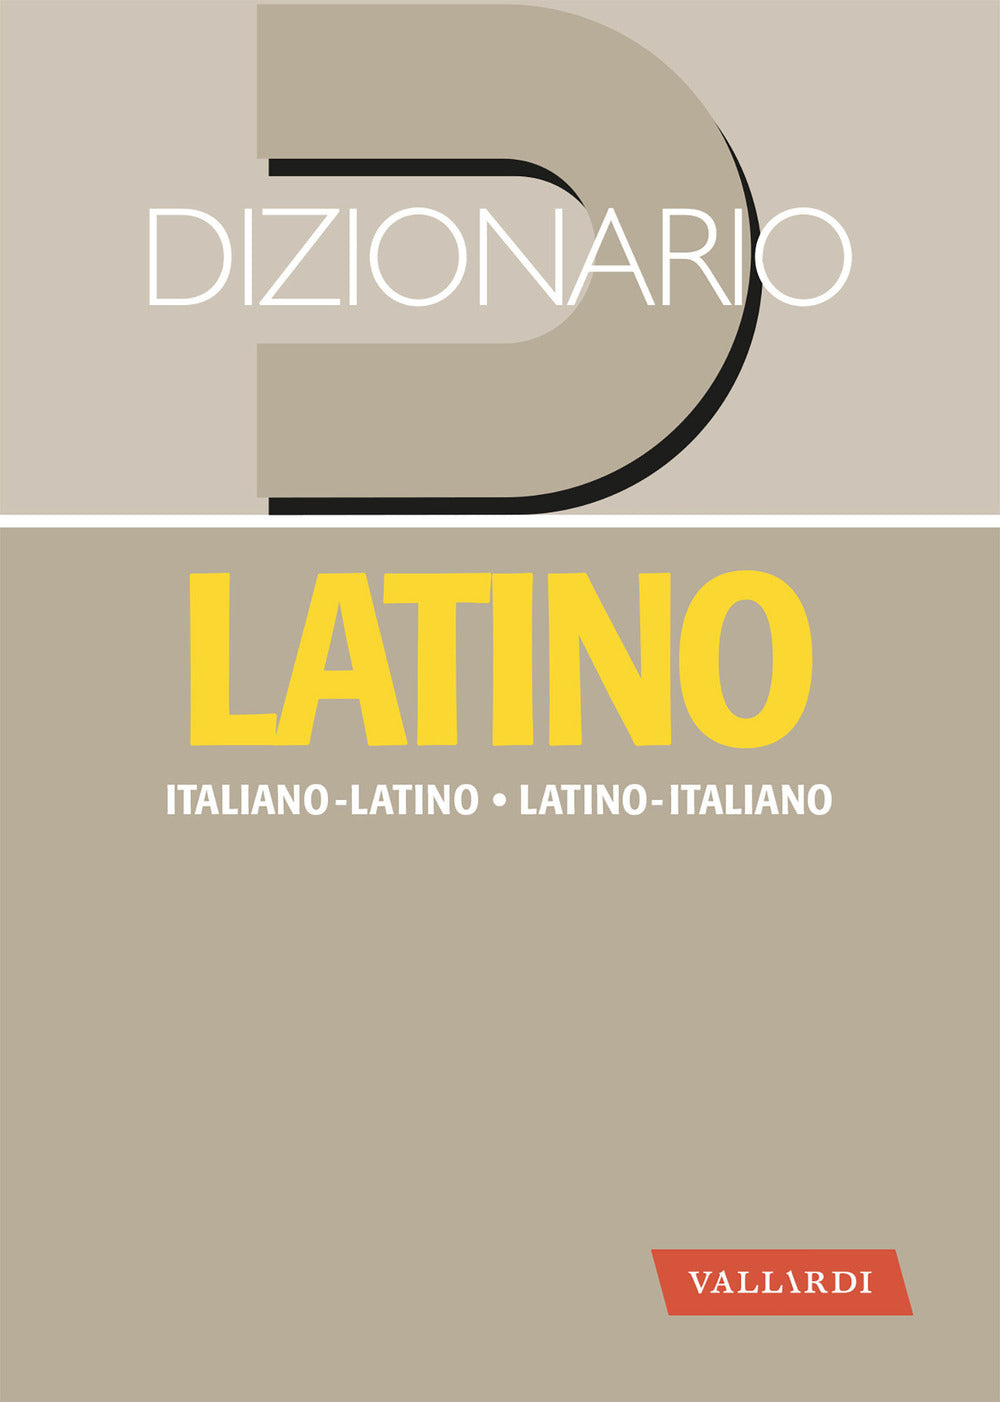 Dizionario latino. Italiano-latino, latino-italiano.